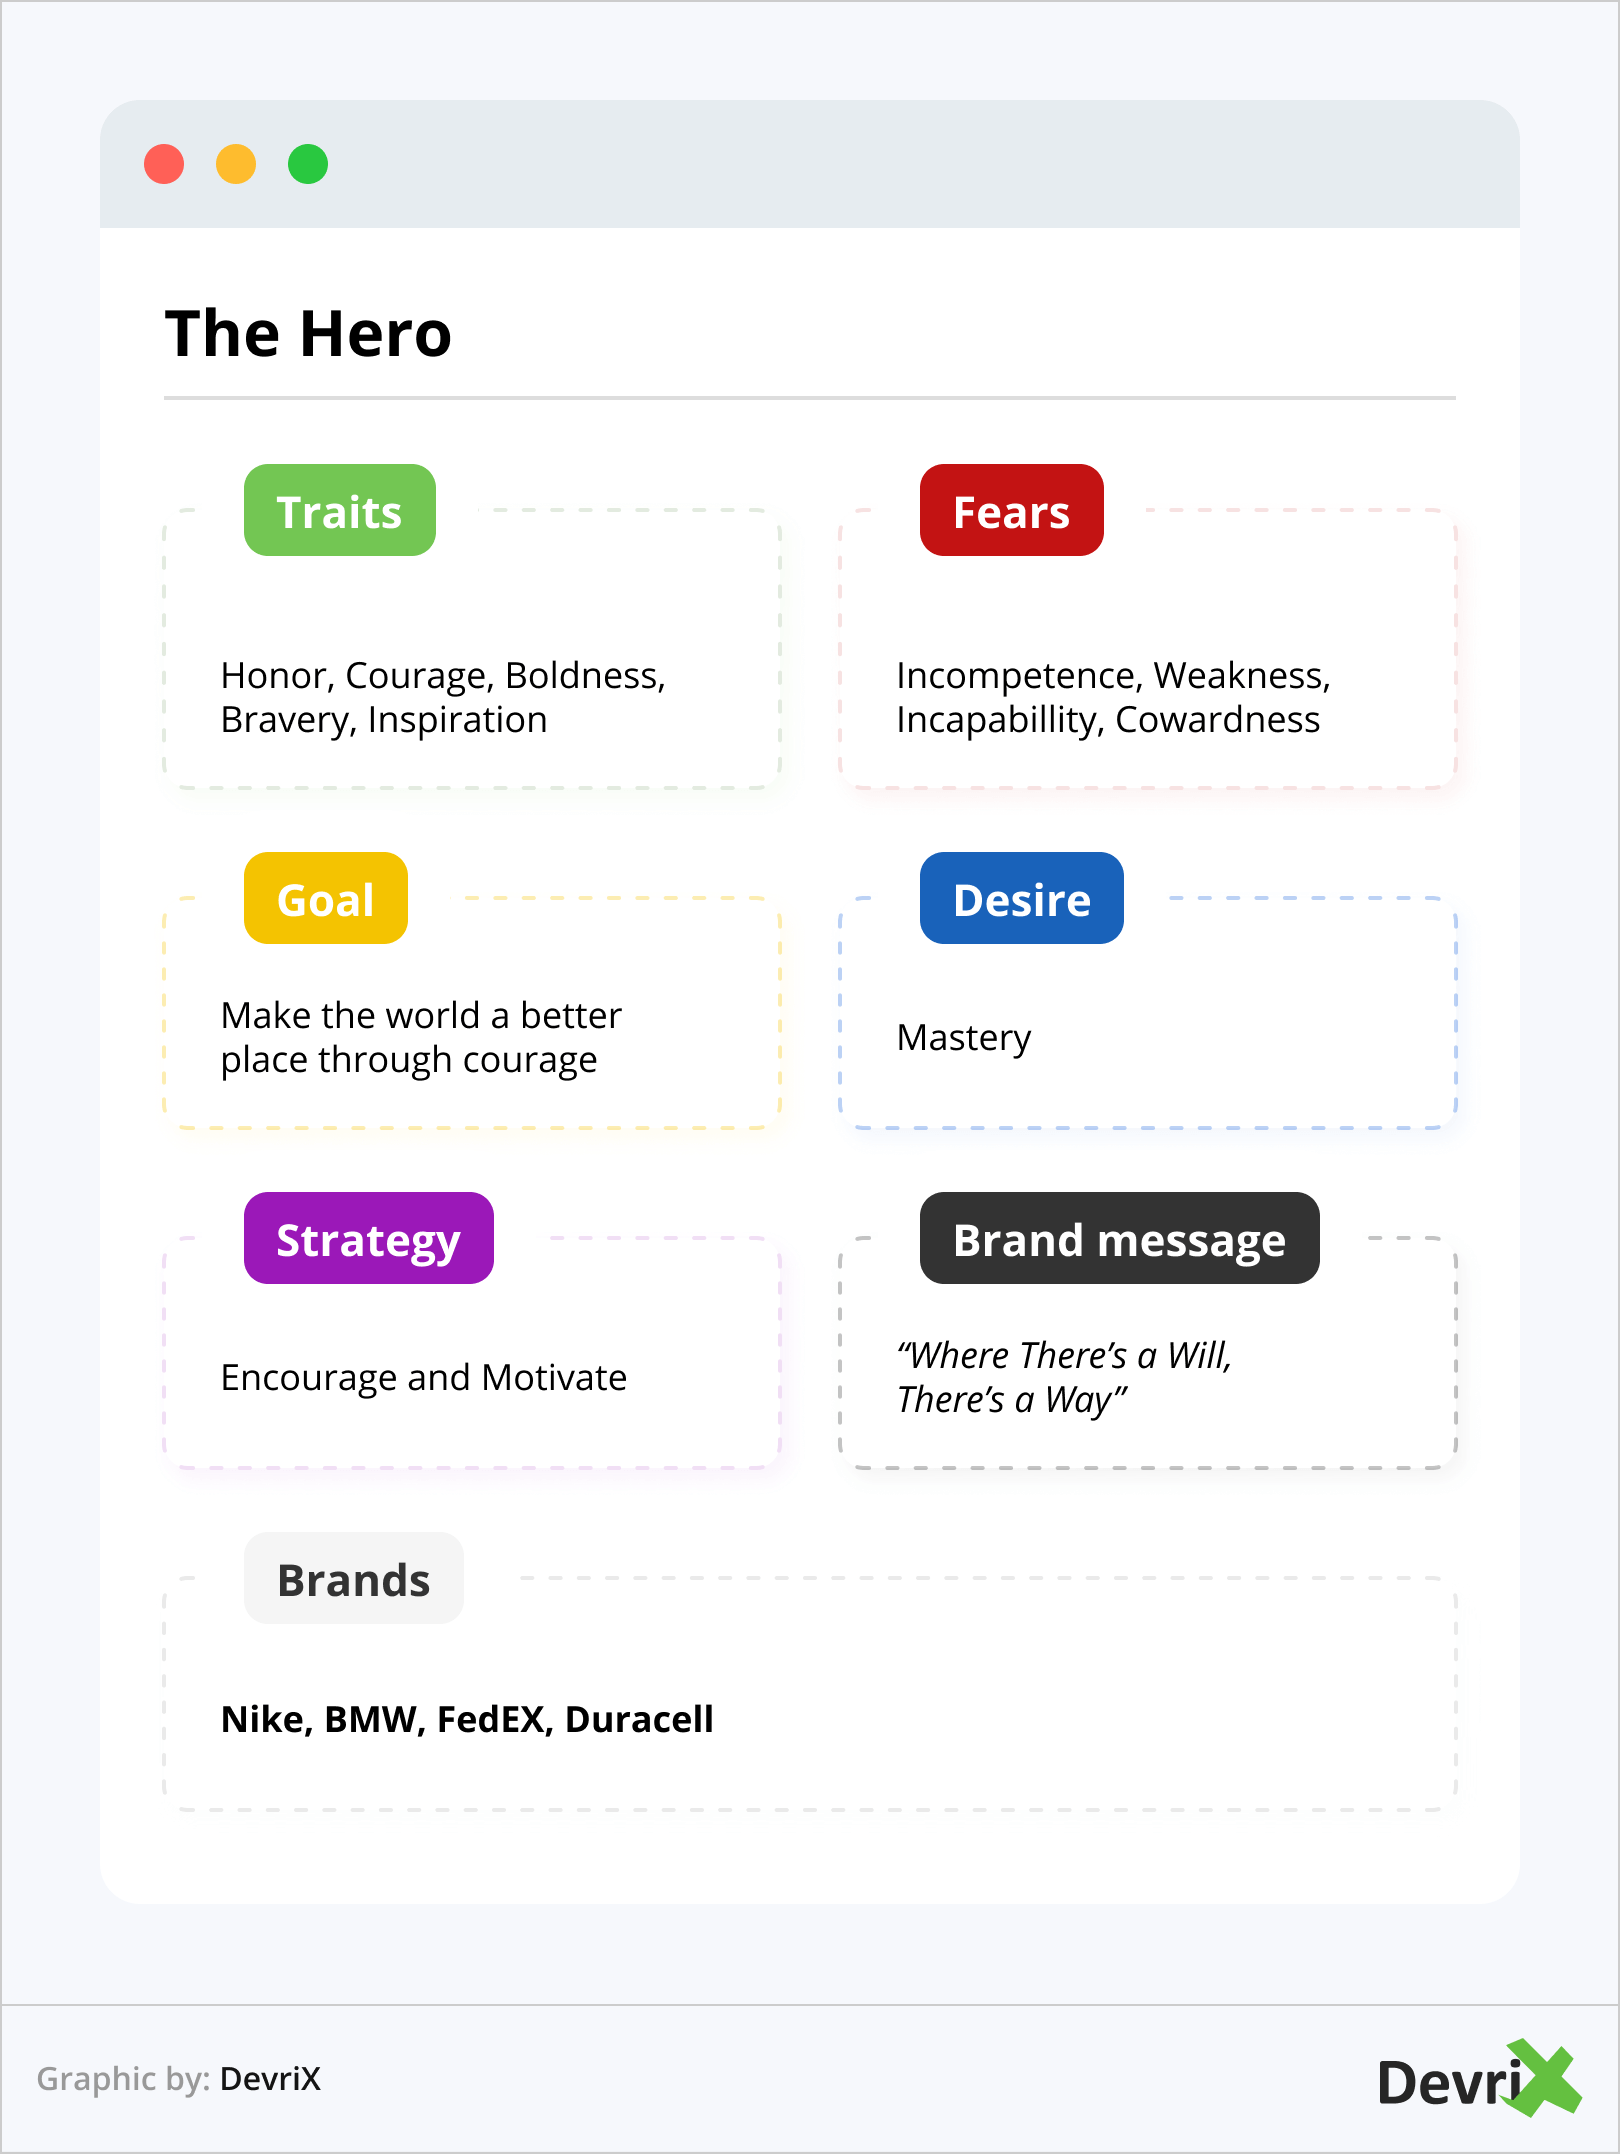 Brand Archetype - The Hero